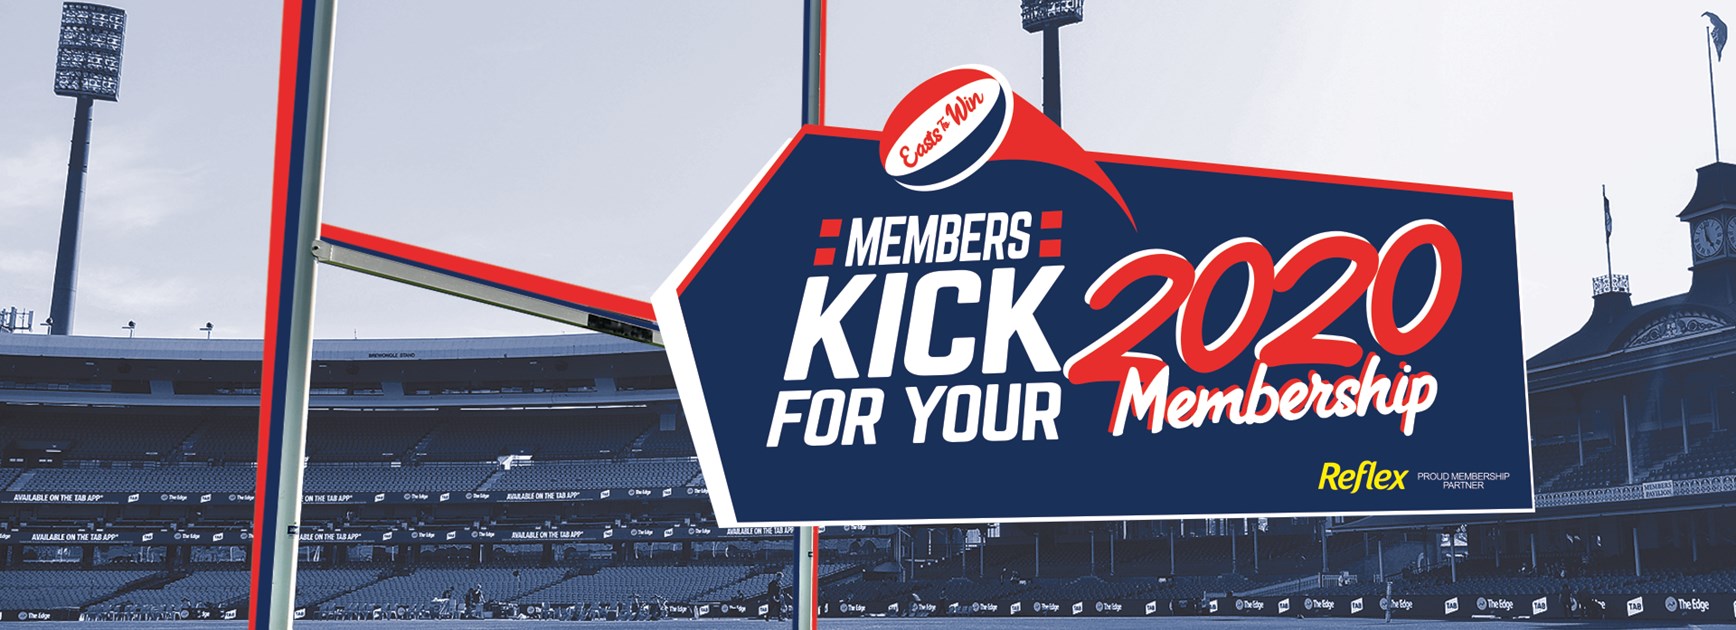 Members kicked, 1 wins their 2020 Membership